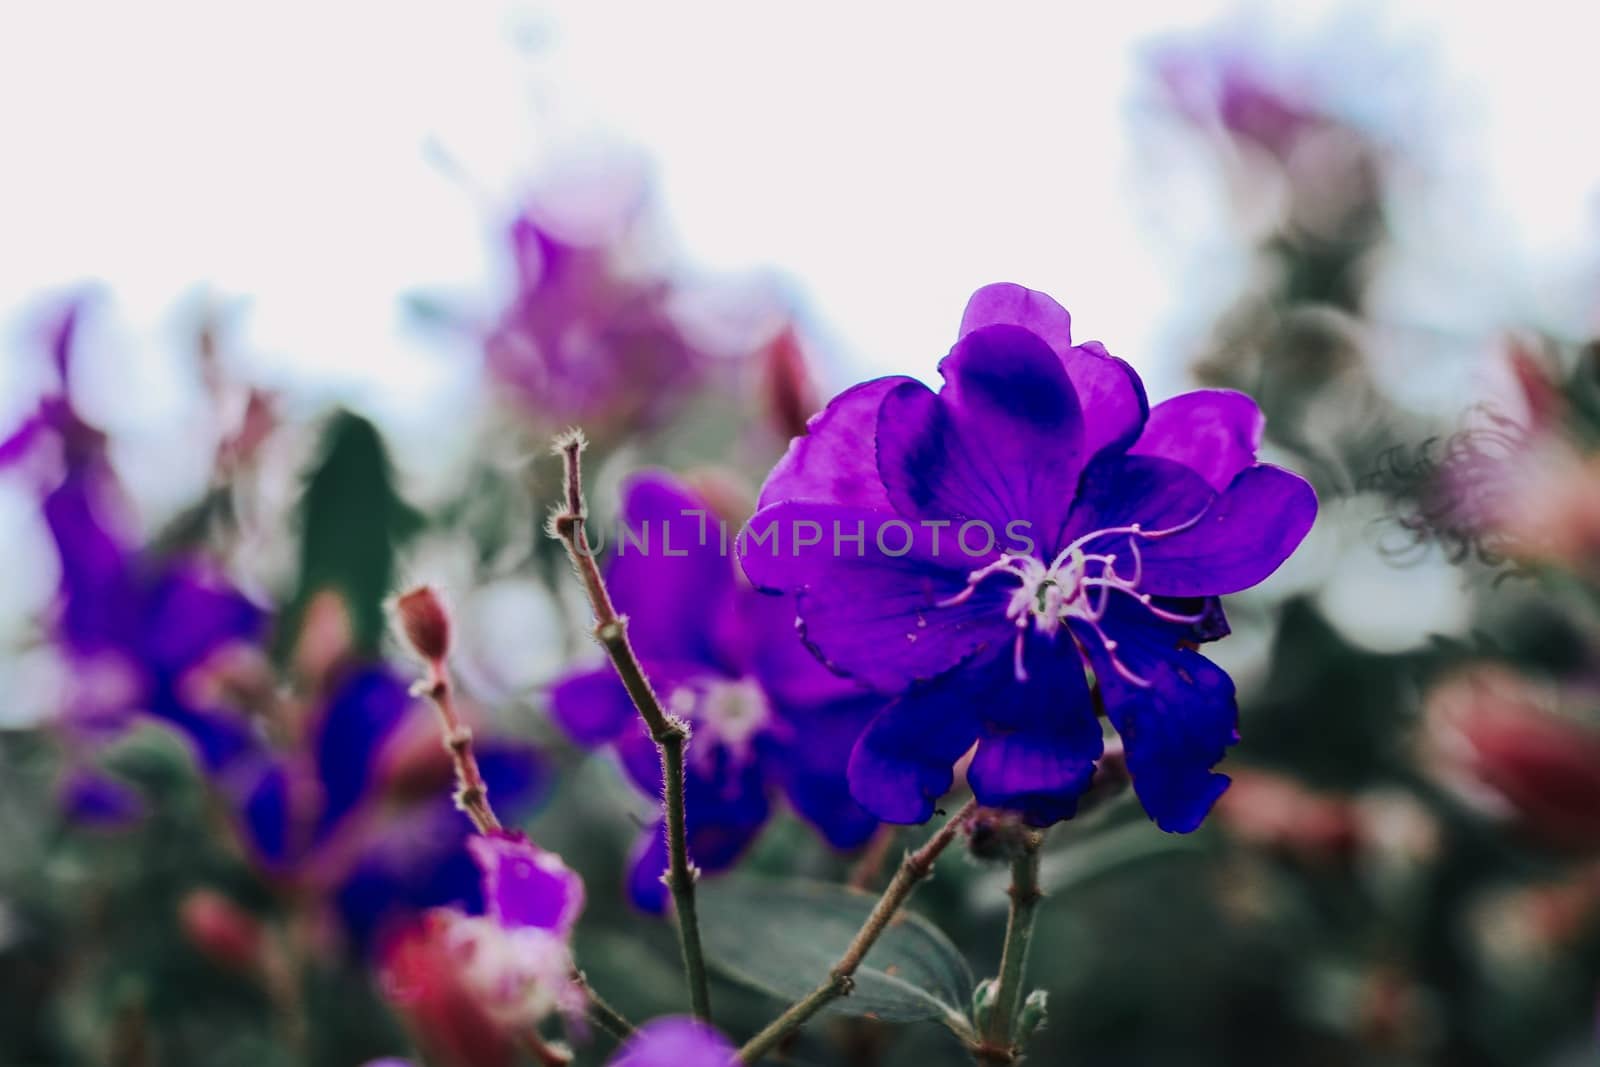 Winter flowers in the rainy season, Background blur